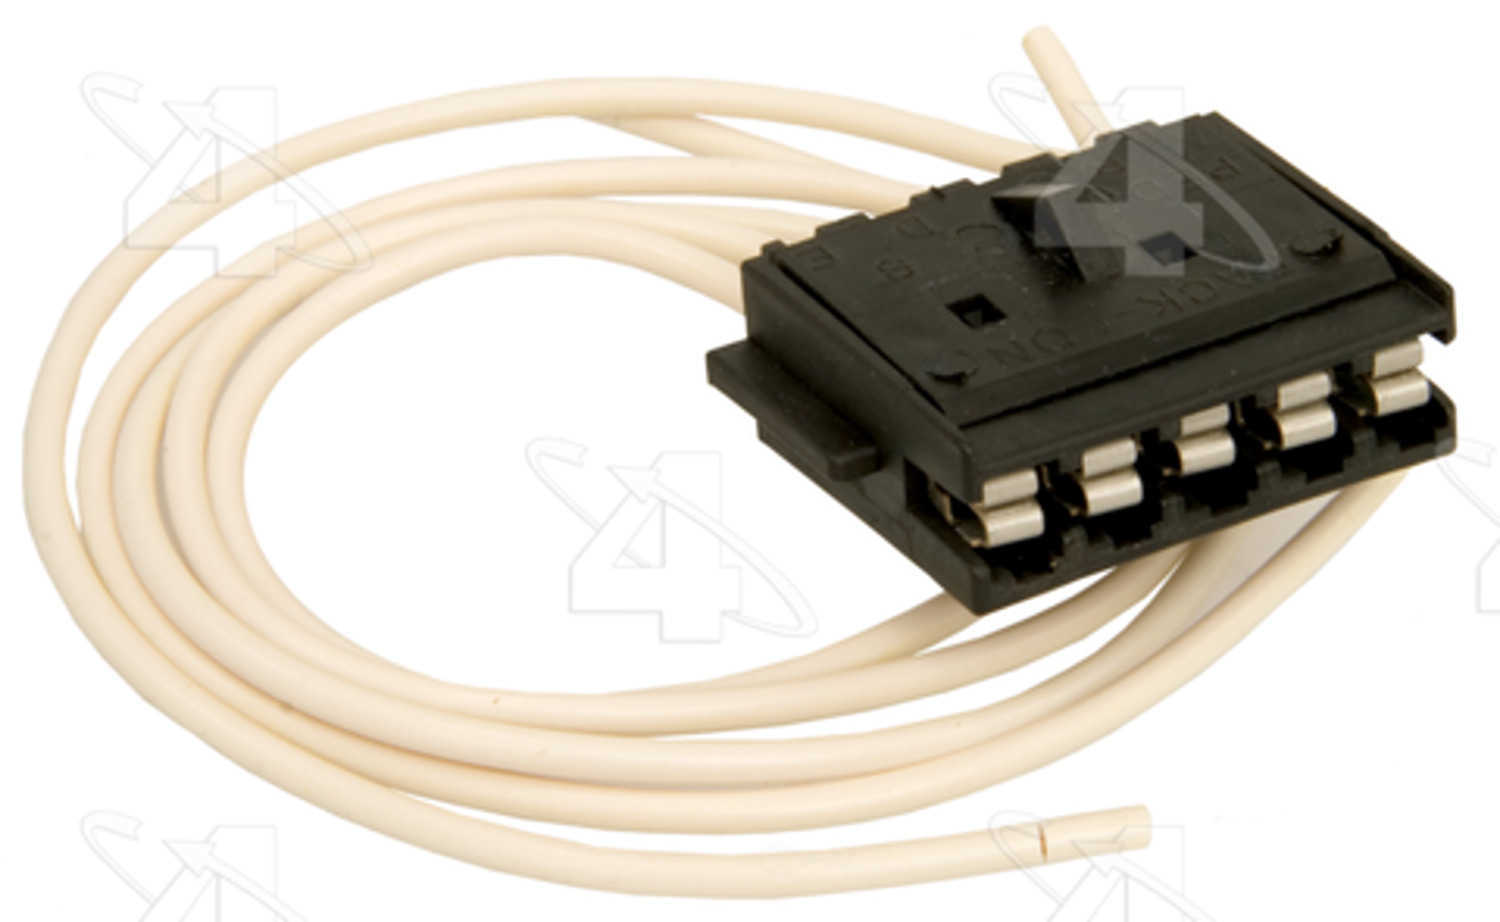 FOUR SEASONS - A/C Clutch Control Relay Harness Connector - FSE 37208